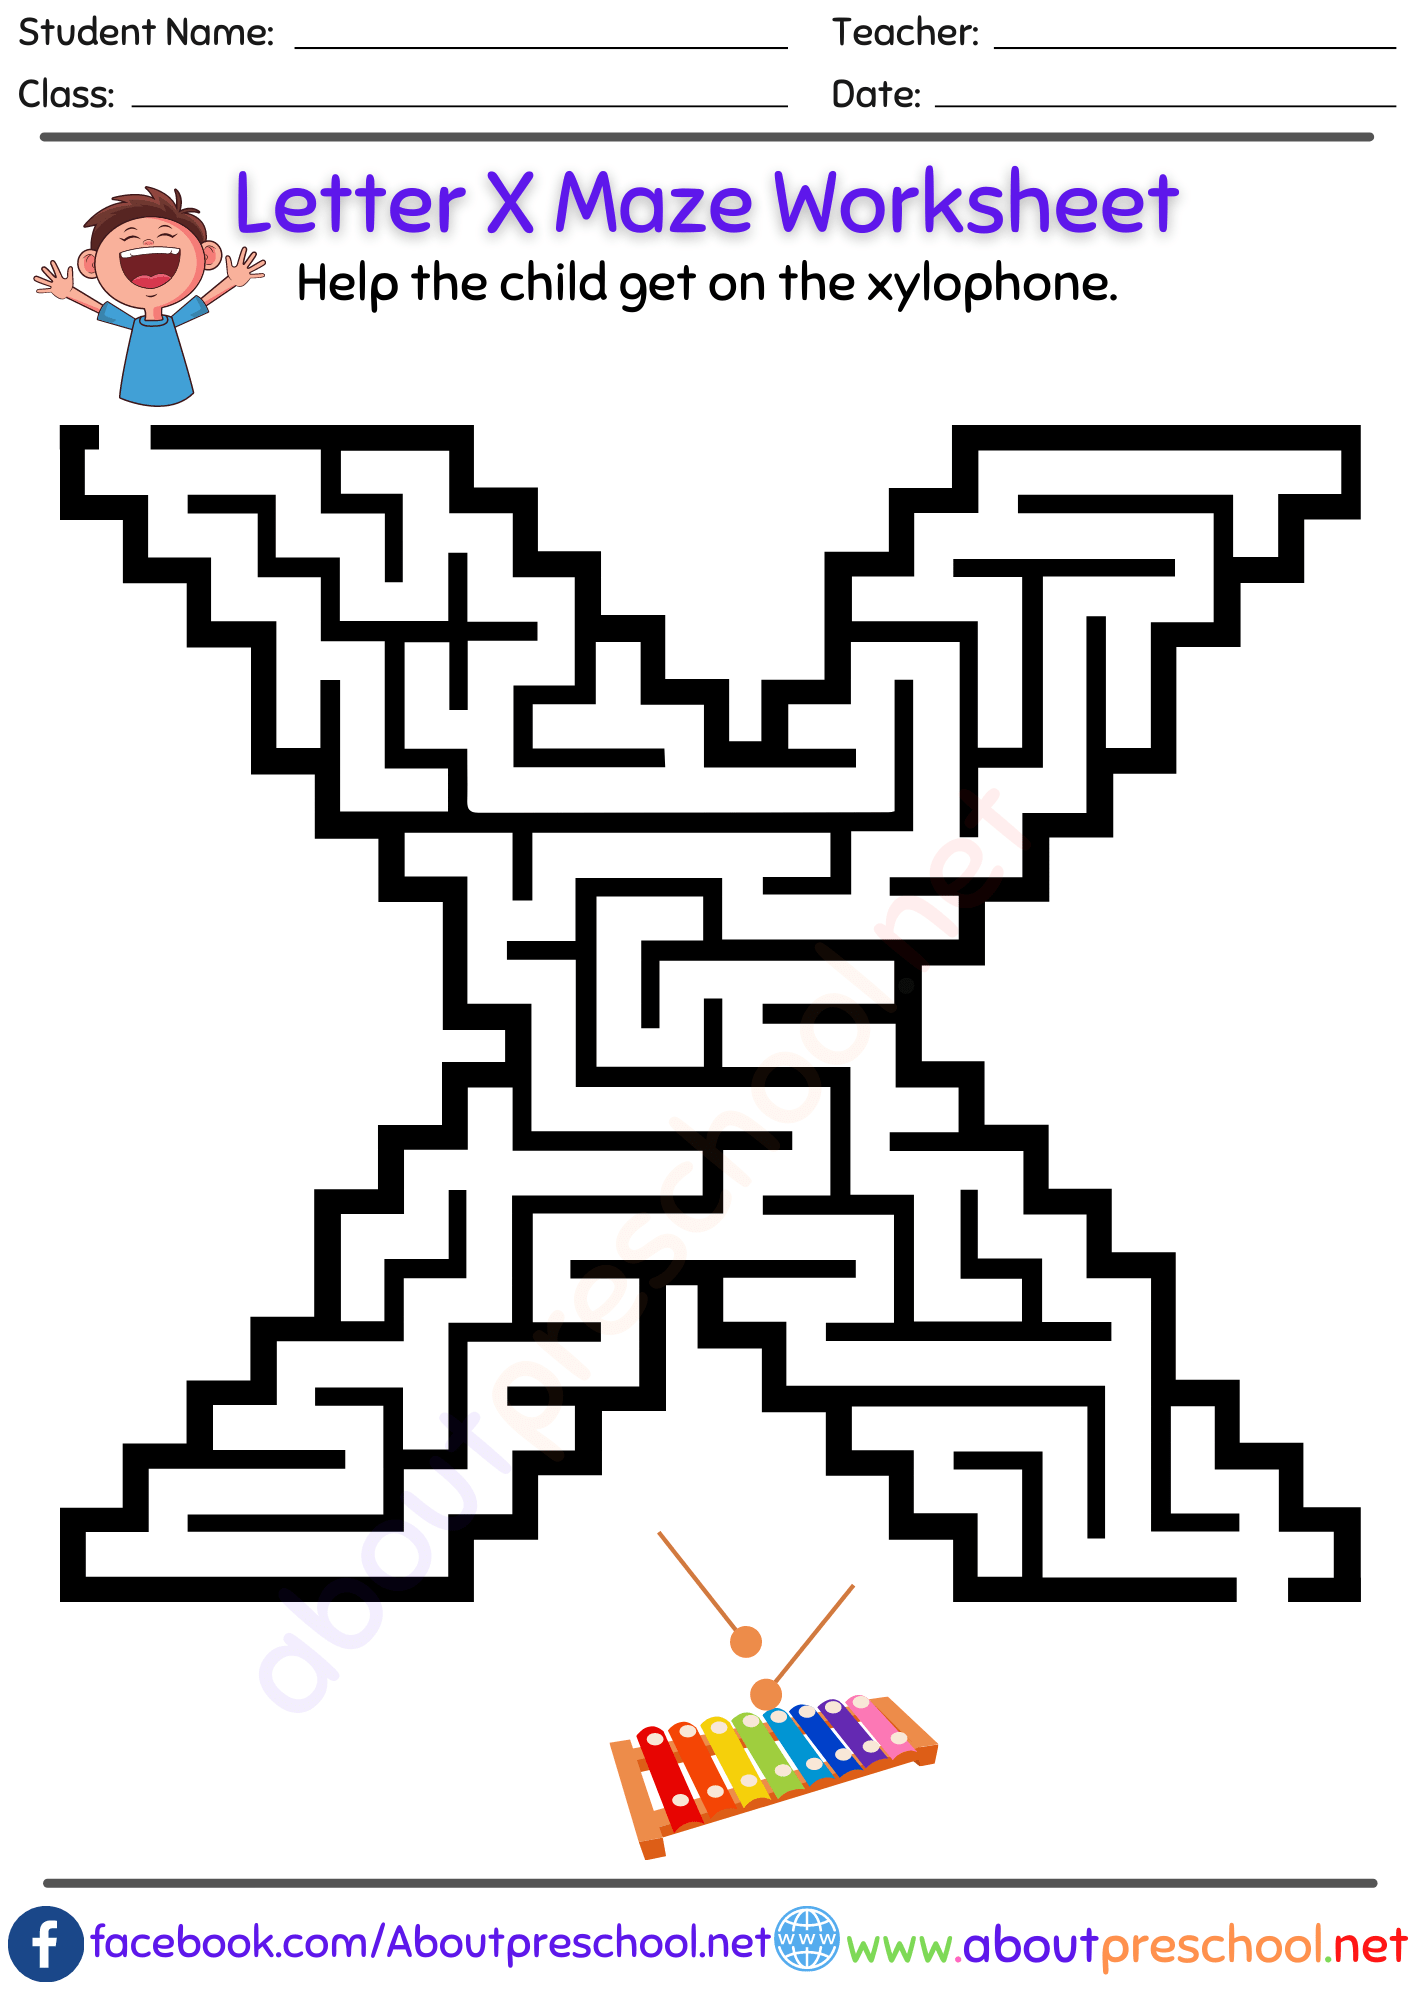 Free Letter X Maze Worksheet